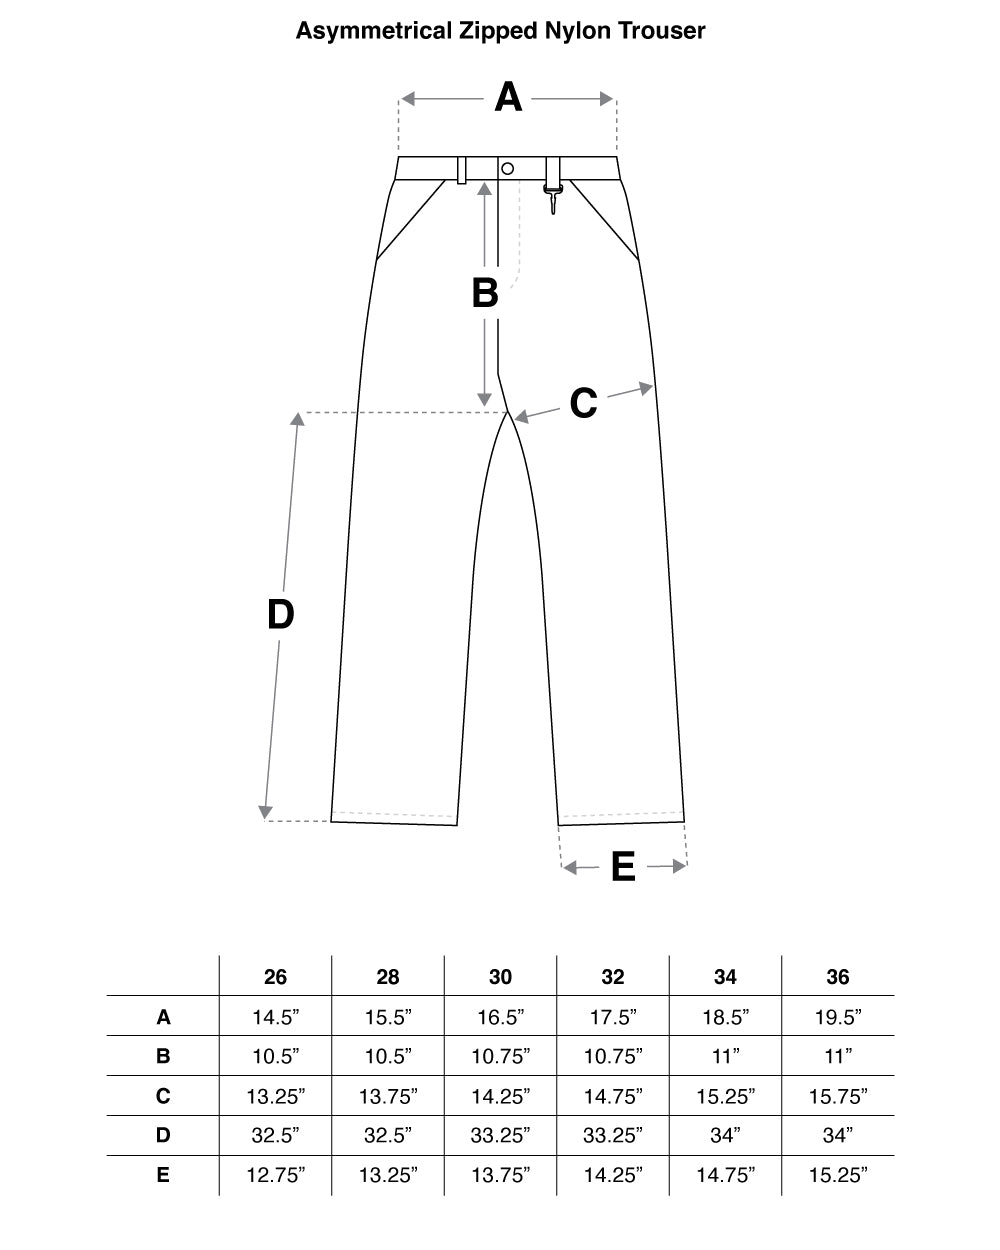 Asymmetrical Zipped Nylon Trouser in Black Size Guide